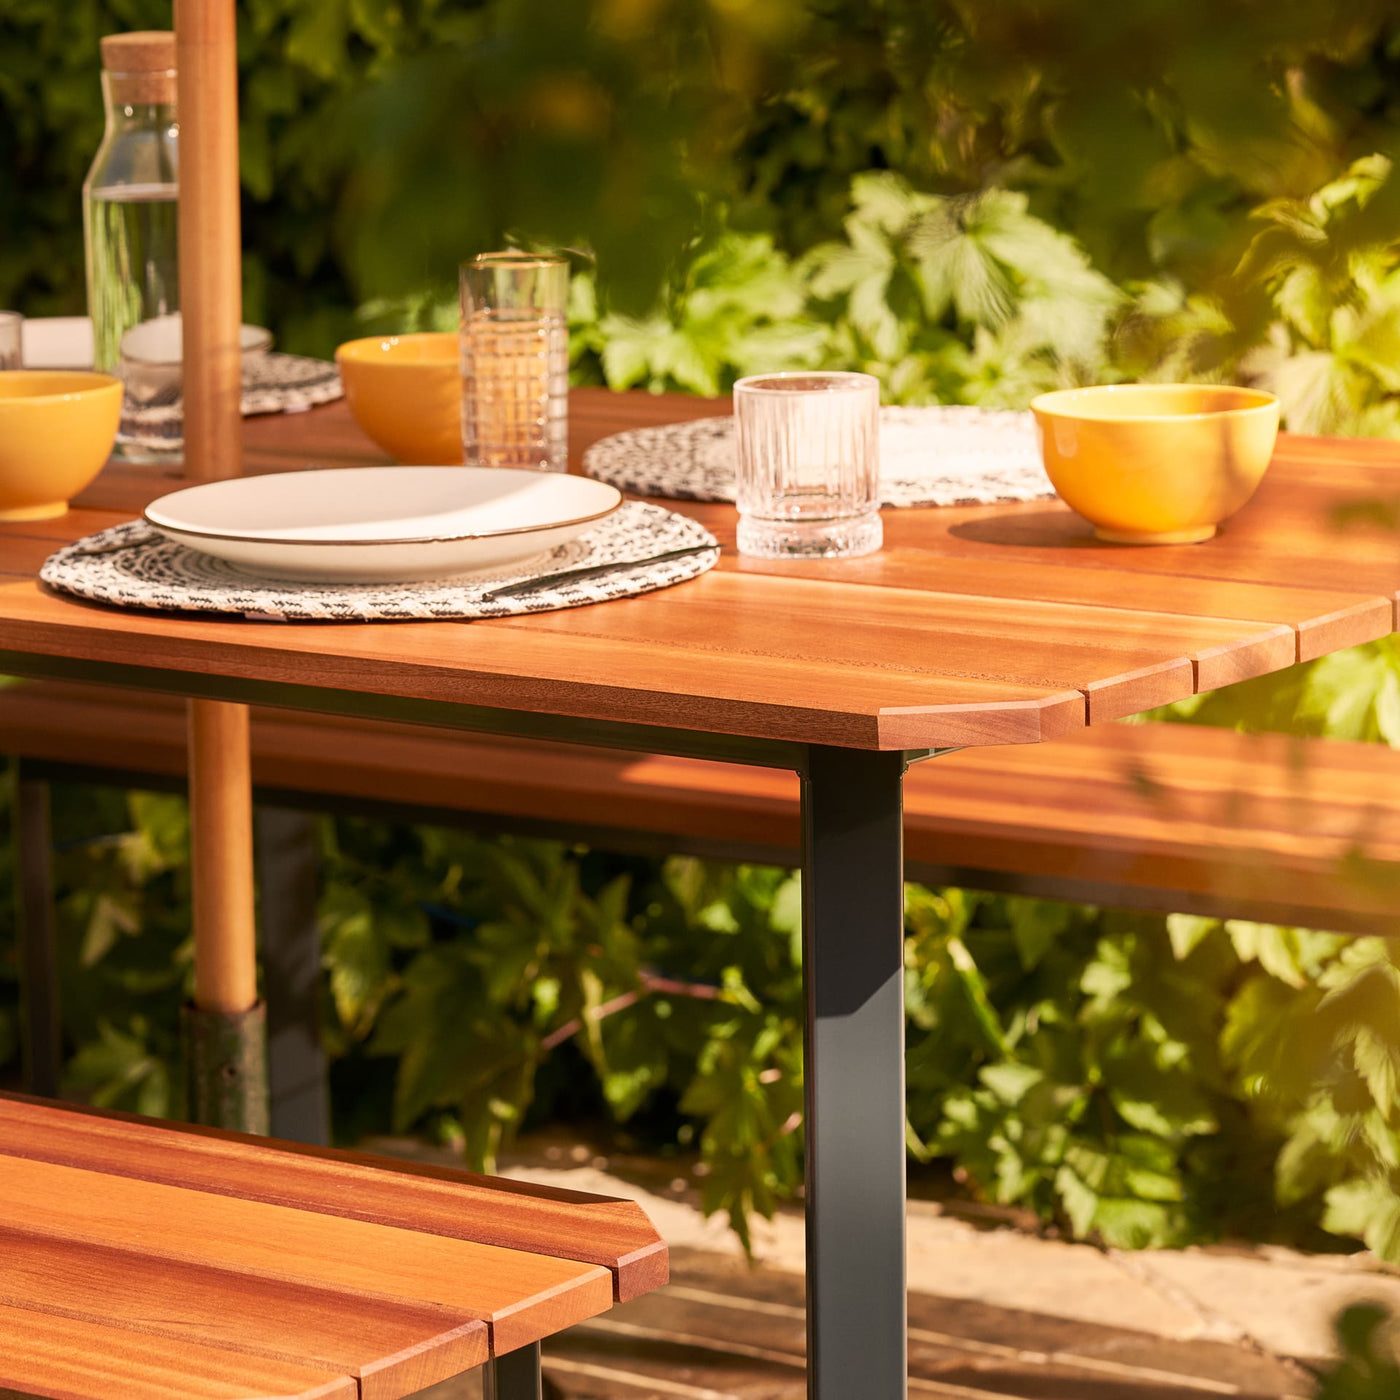 Angled Hardwood Garden Table Set